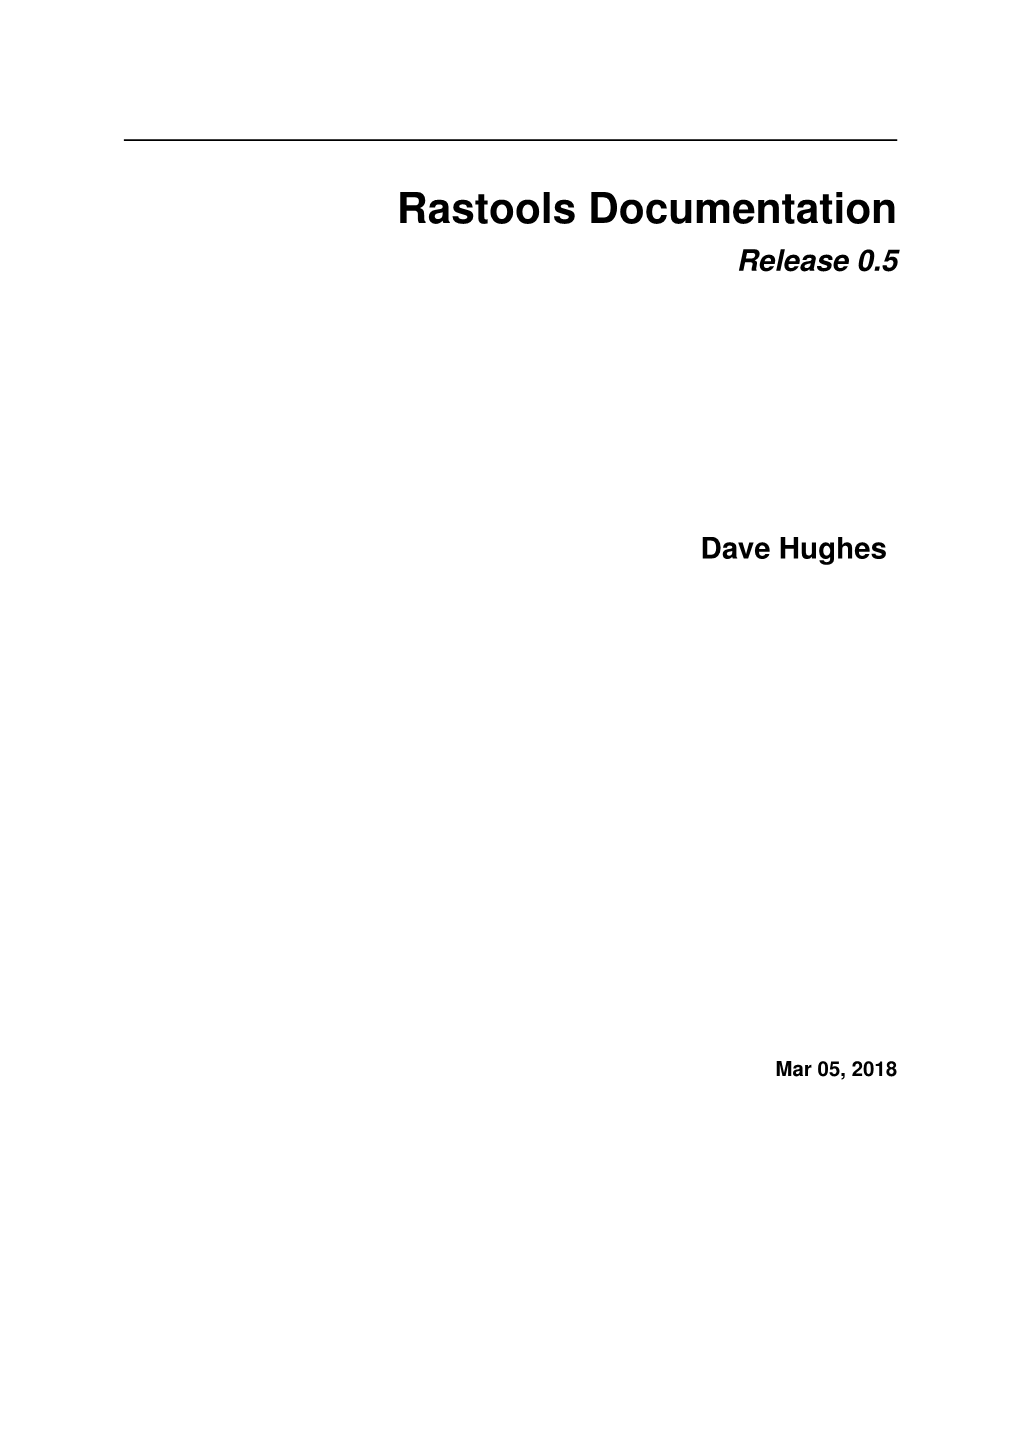 Rastools Documentation Release 0.5